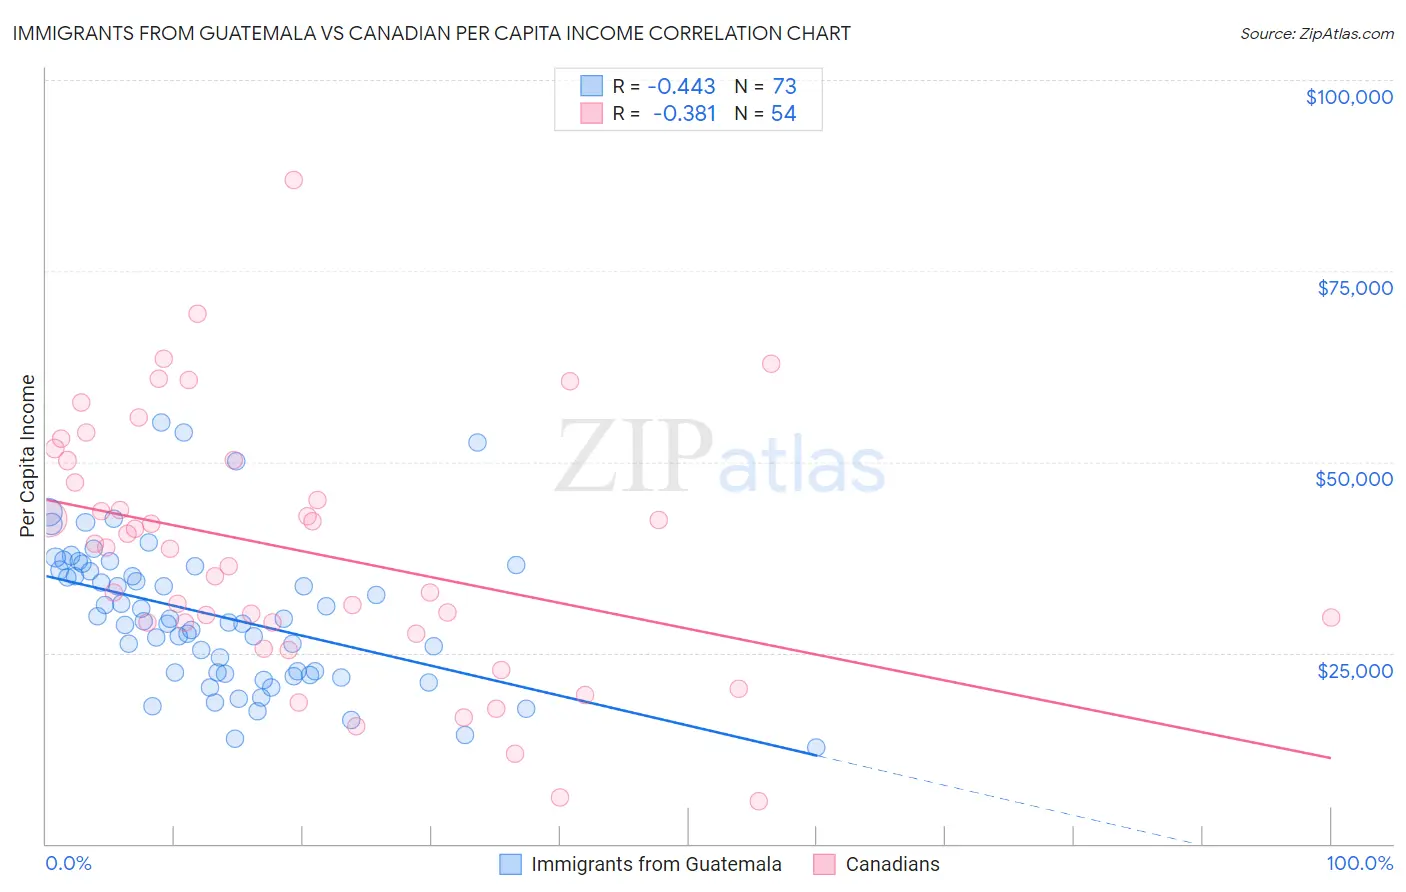 Immigrants from Guatemala vs Canadian Per Capita Income